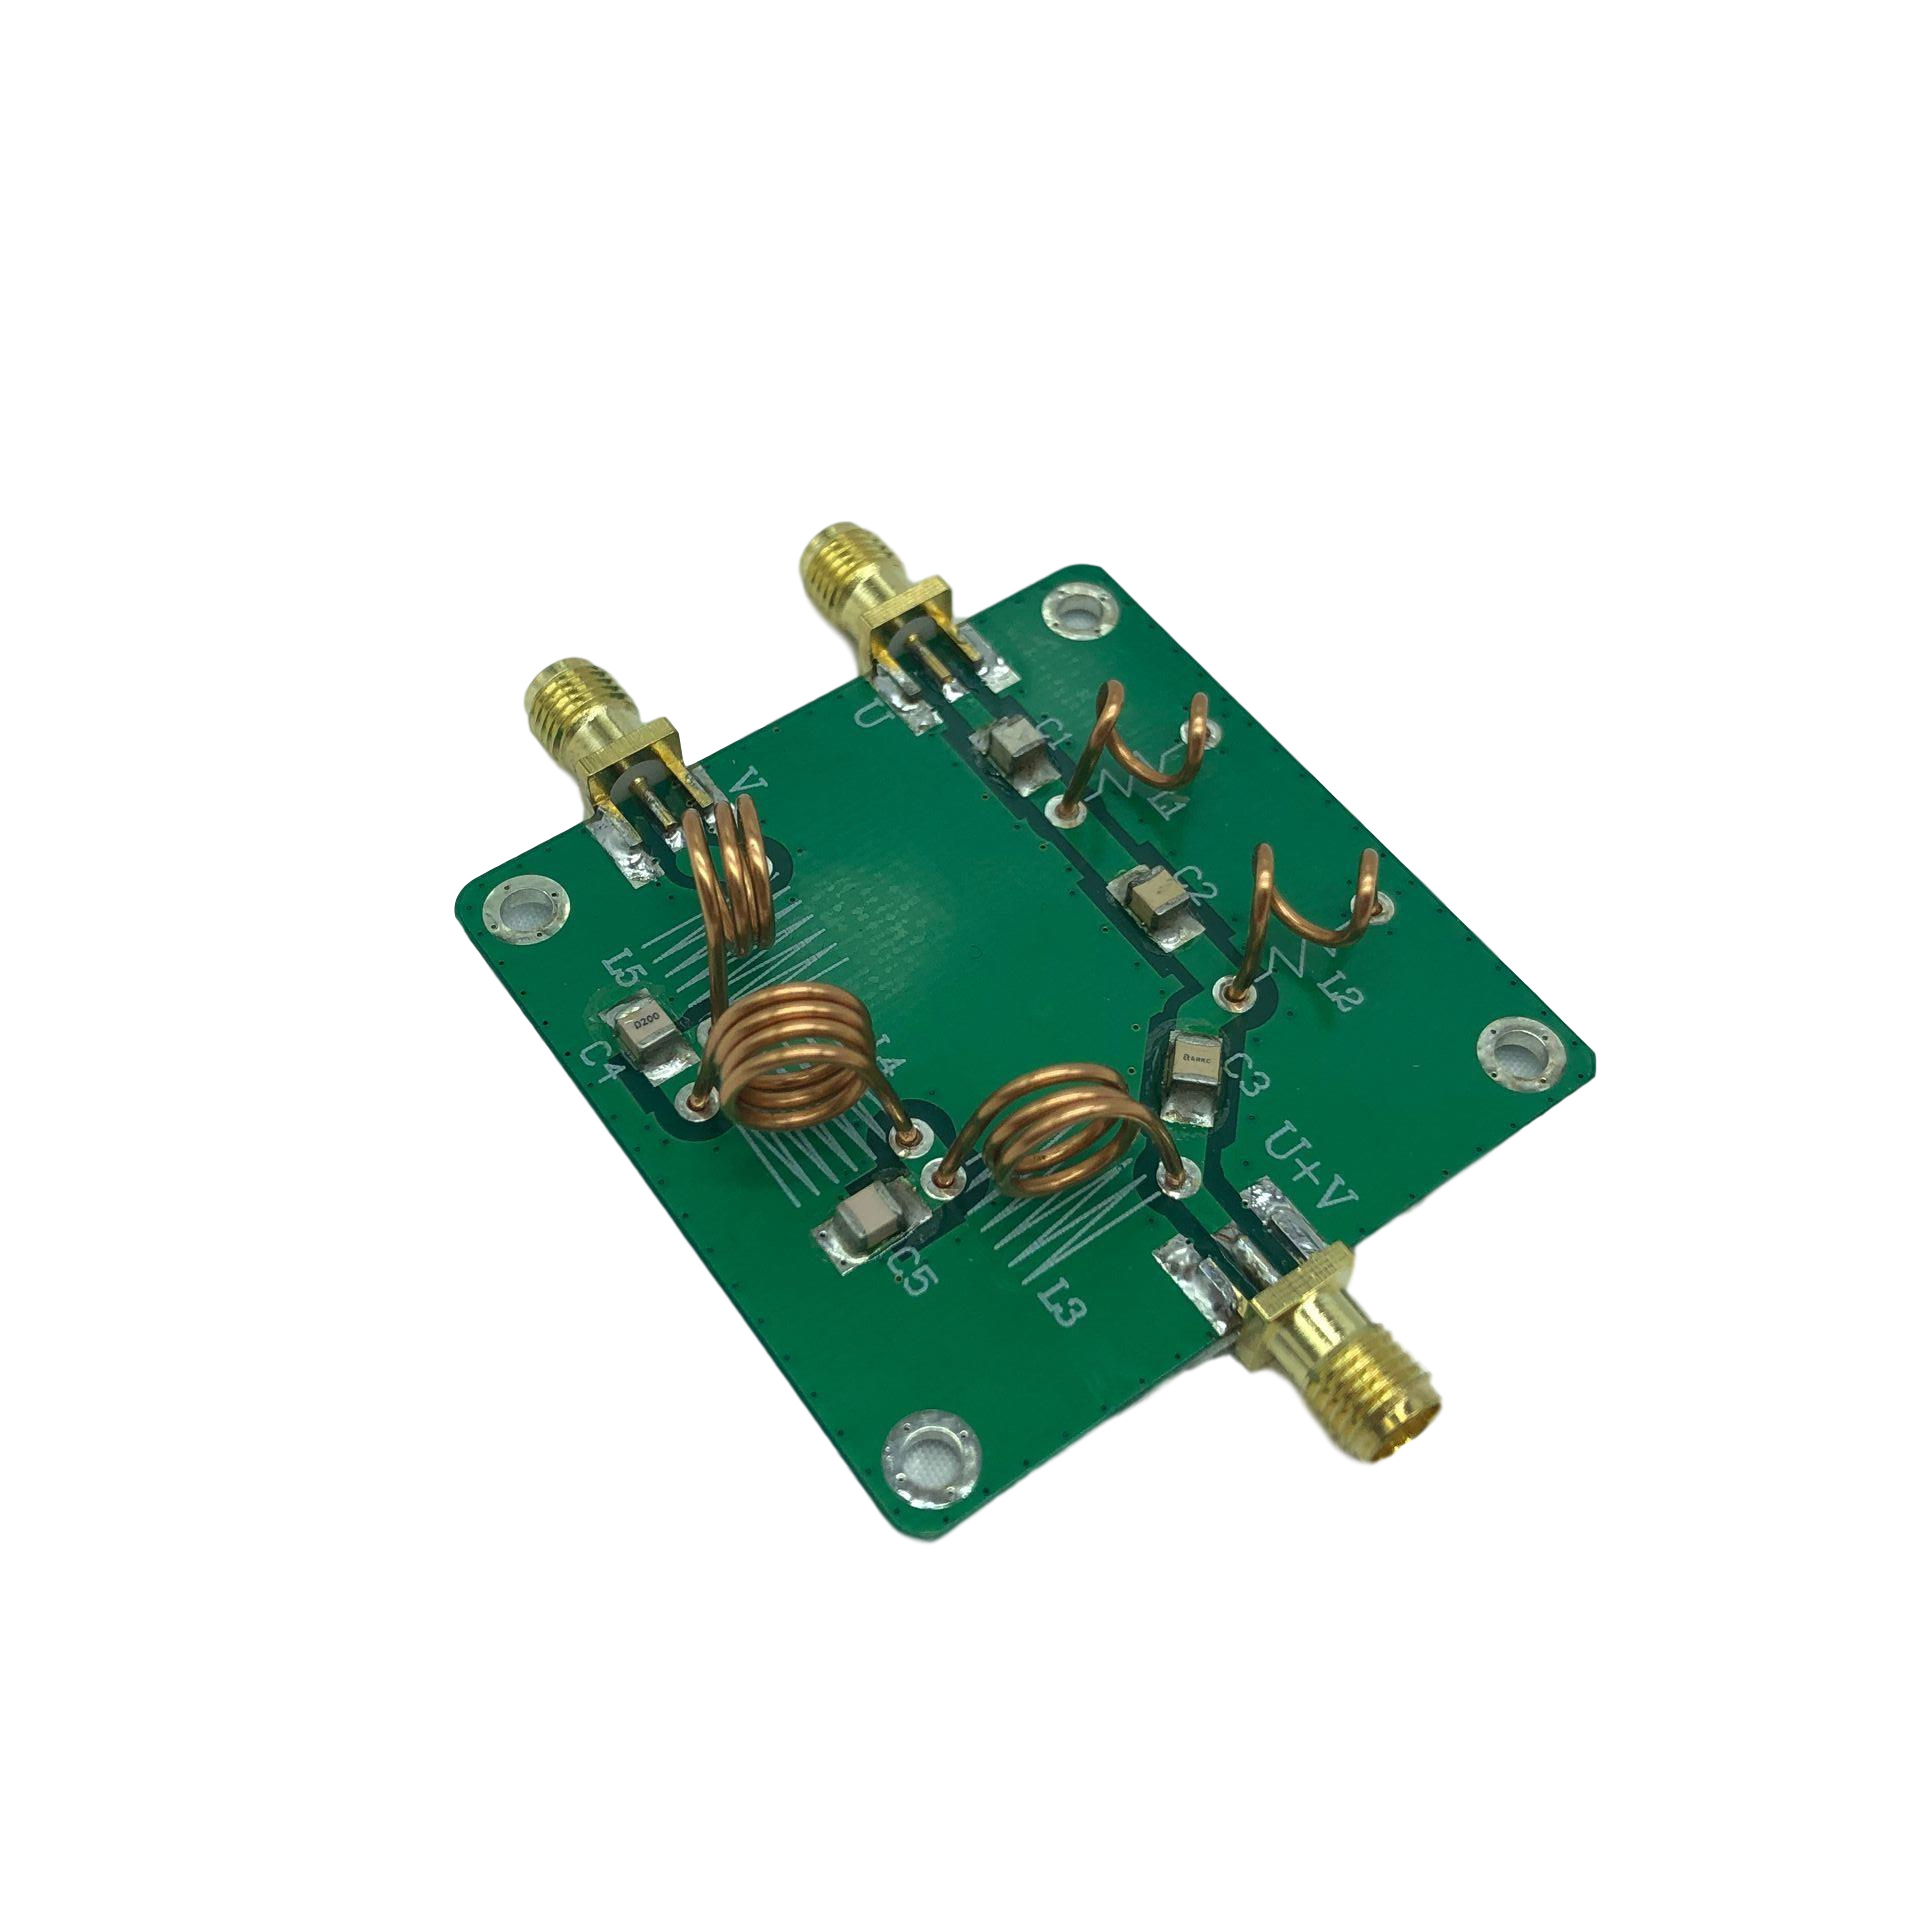 UV-Combiner-UV-Splitter-LC-Filter-Antenna-Combiner-Board-Passive-Module-1800190-3